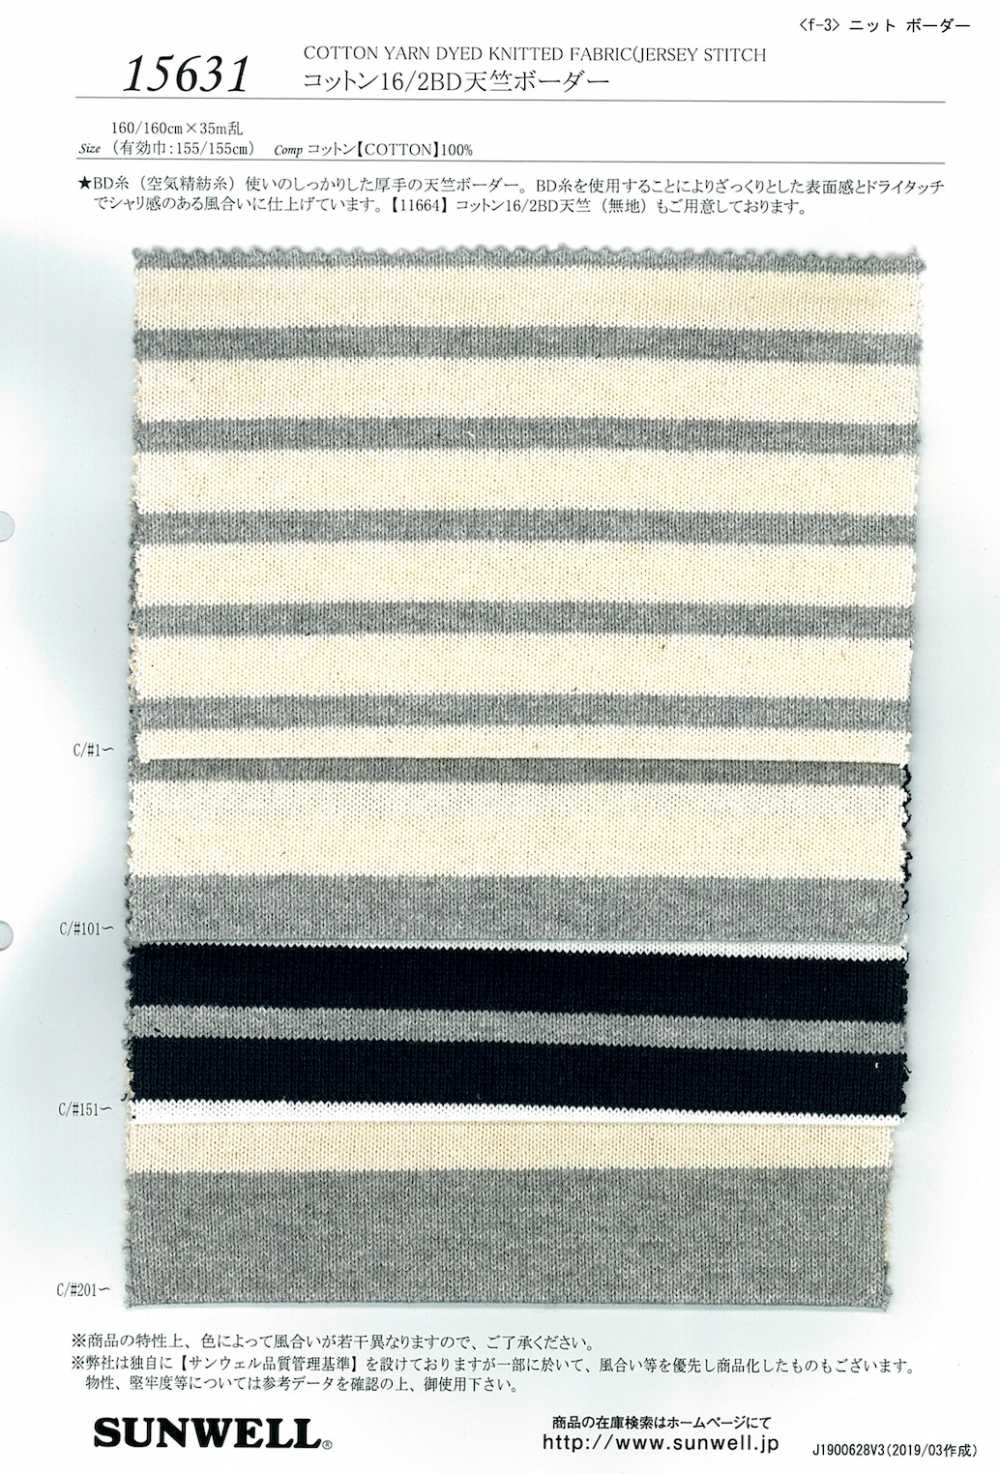 15631 16/2BD Cotton Jersey Horizontal Stripes[Textile / Fabric] SUNWELL